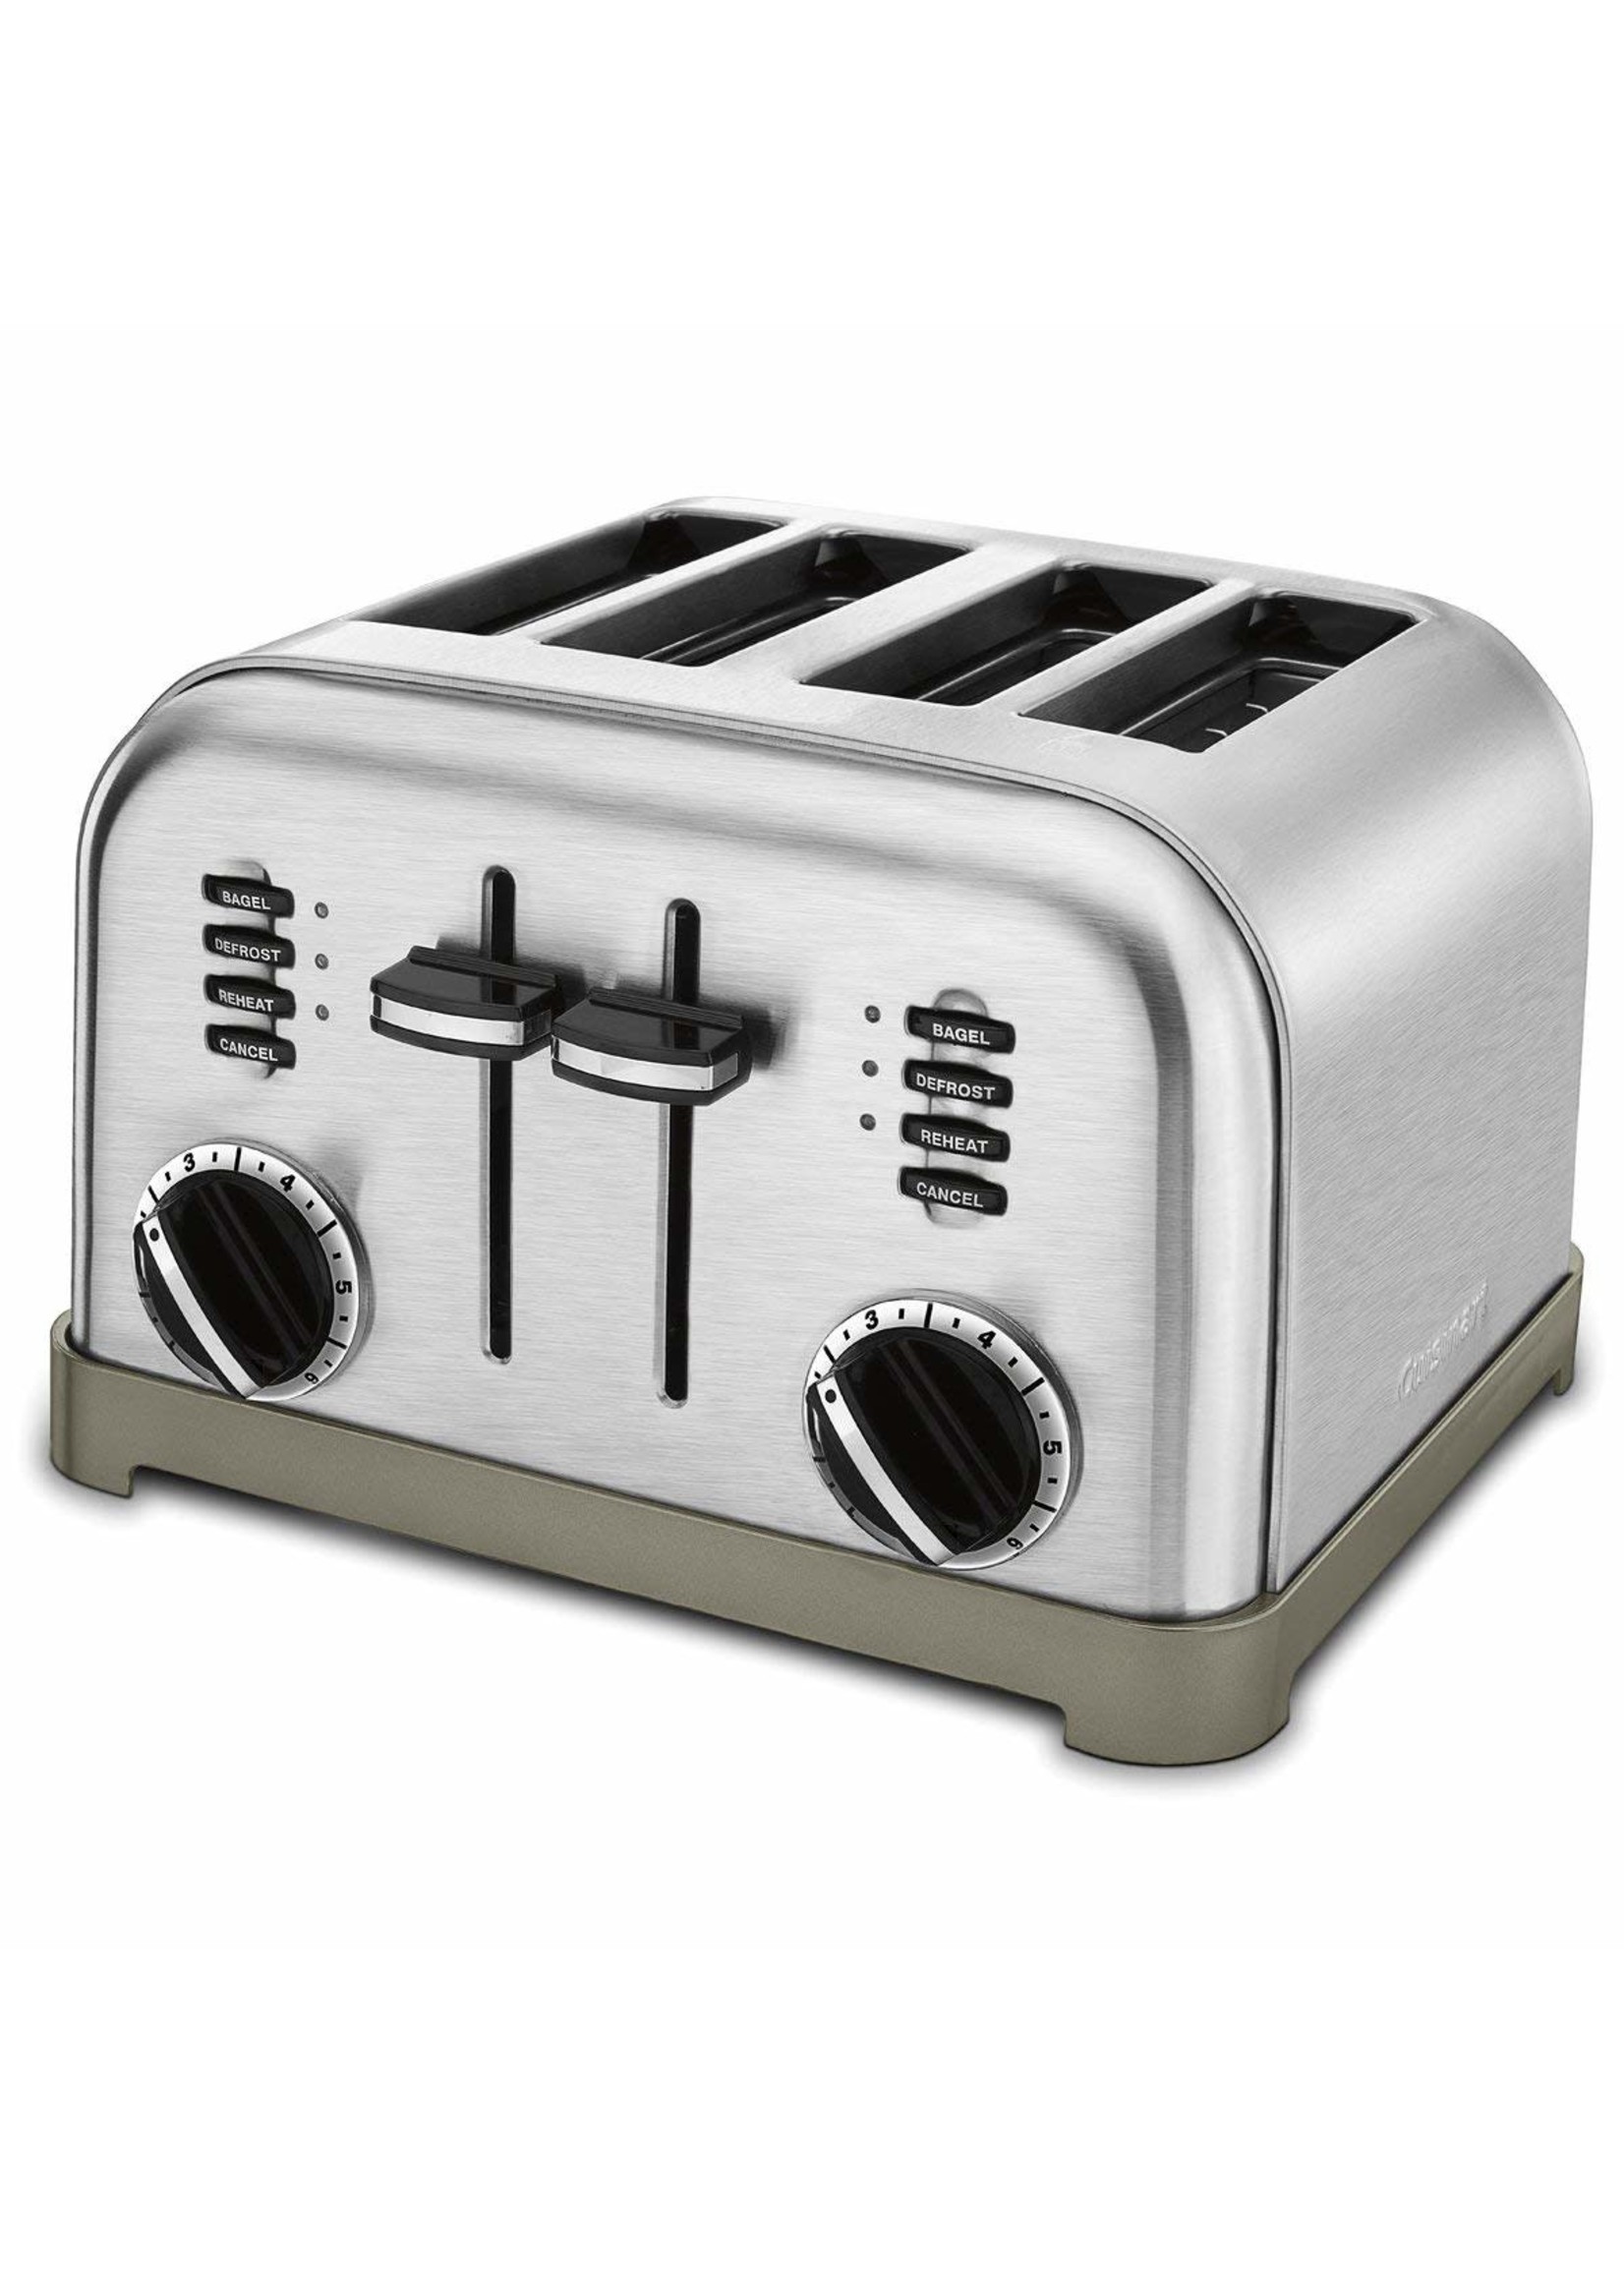 Toaster Classic 4-Slice